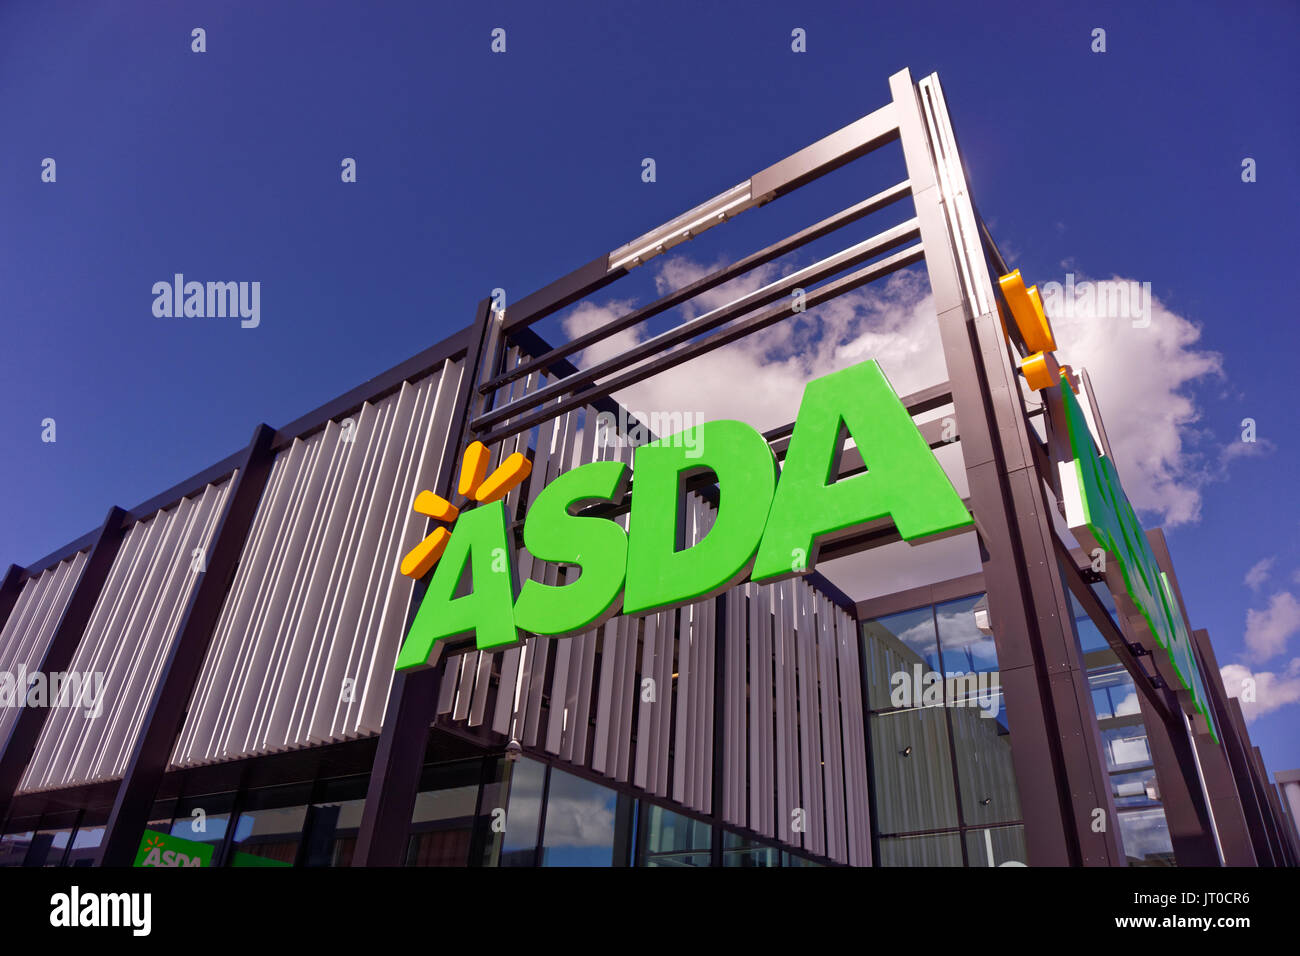 The new Asda store in Northwich, Cheshire, England, UK. Stock Photo